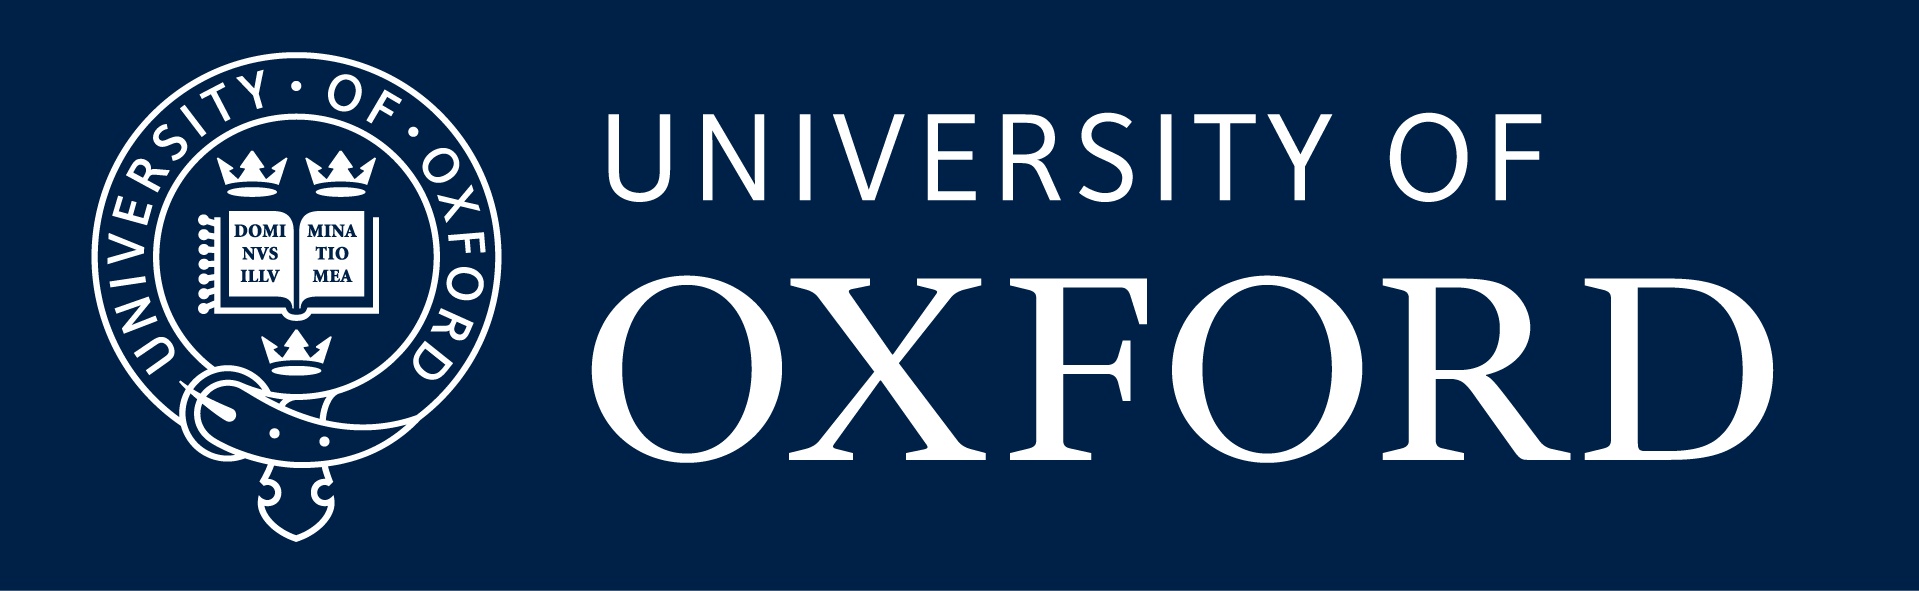 Oxford university essay format